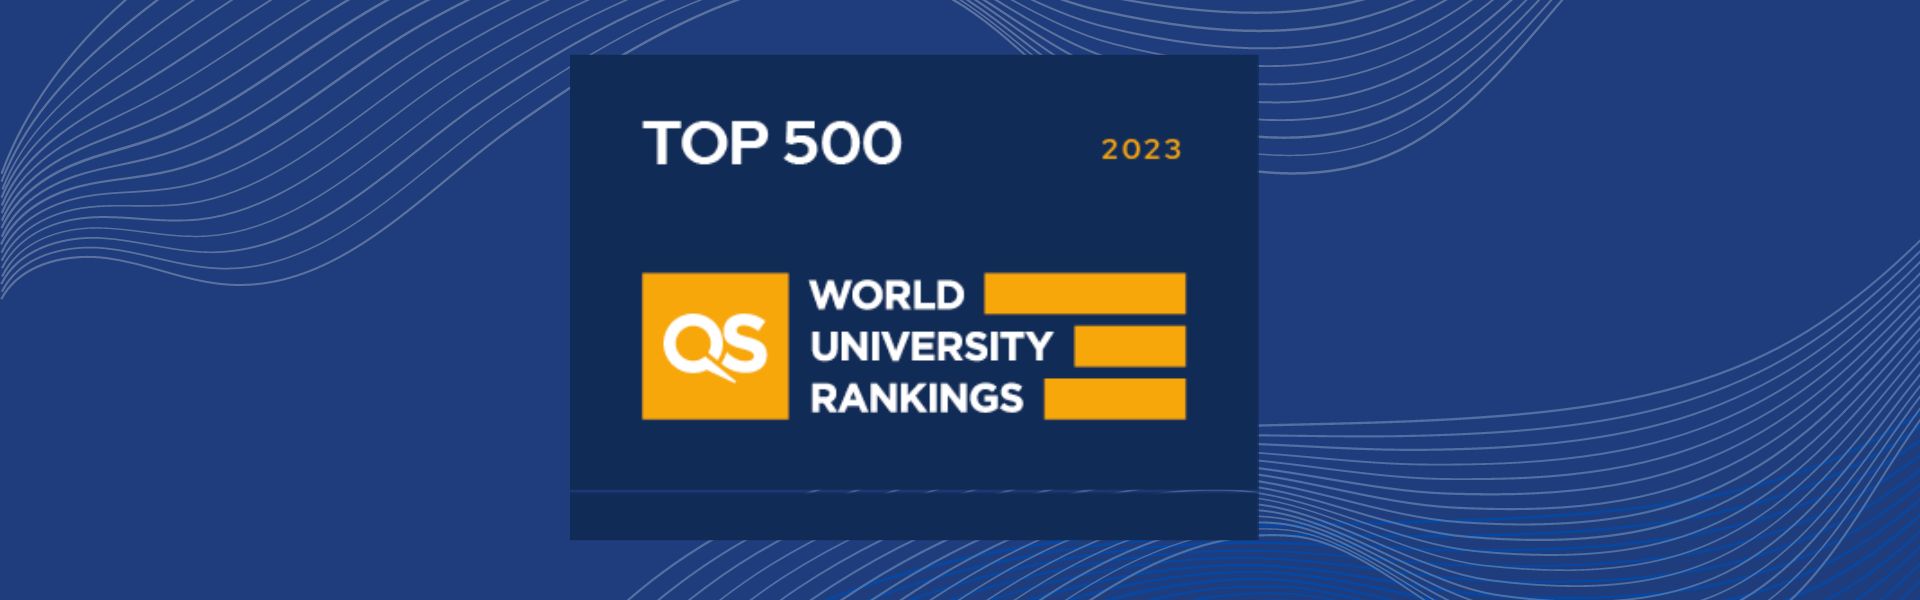 QSWUR Badge 2022-2023 top 500